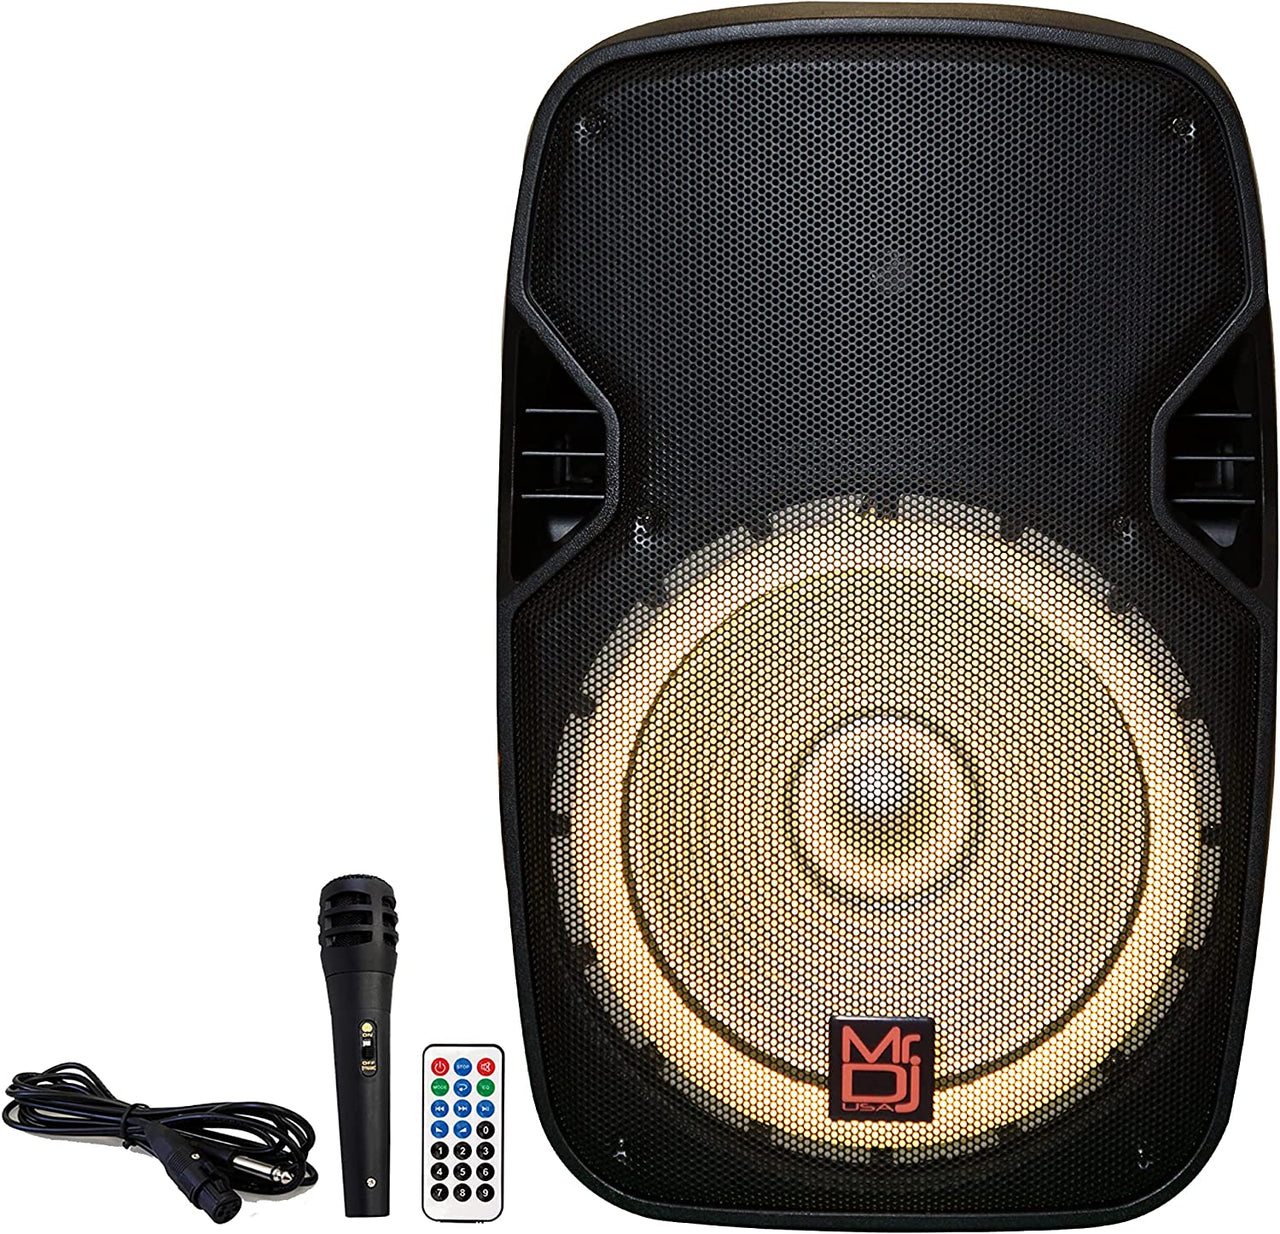 MR DJ PBX4200PKG 15" 2-Way PA DJ 3000W Active Powered Bluetooth Karaoke Speaker LED Lighting + Speaker Stand